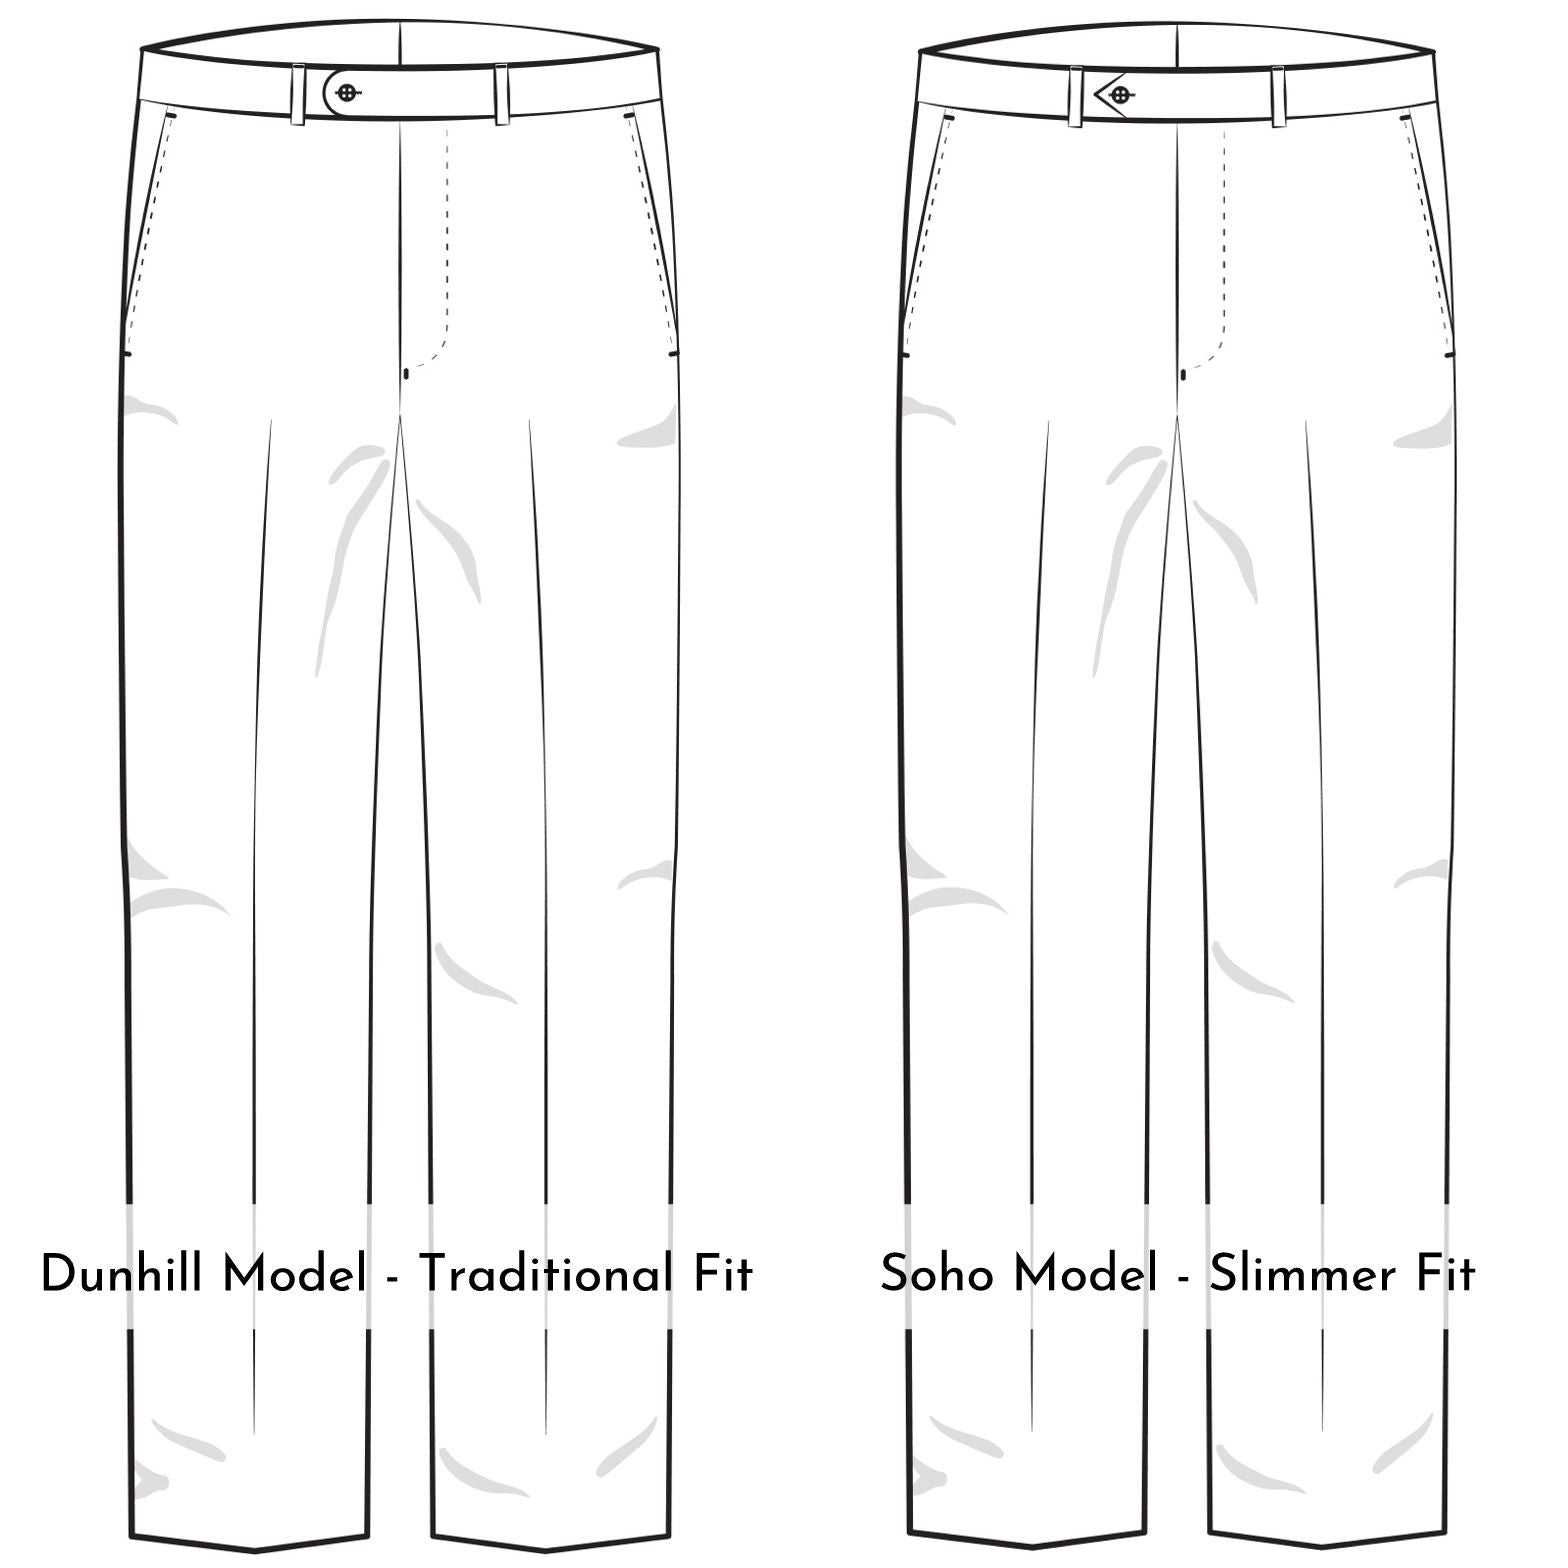 Super 120s Wool Travel Twill Comfort-EZE Trouser in Khaki (Flat Front Models) by Ballin